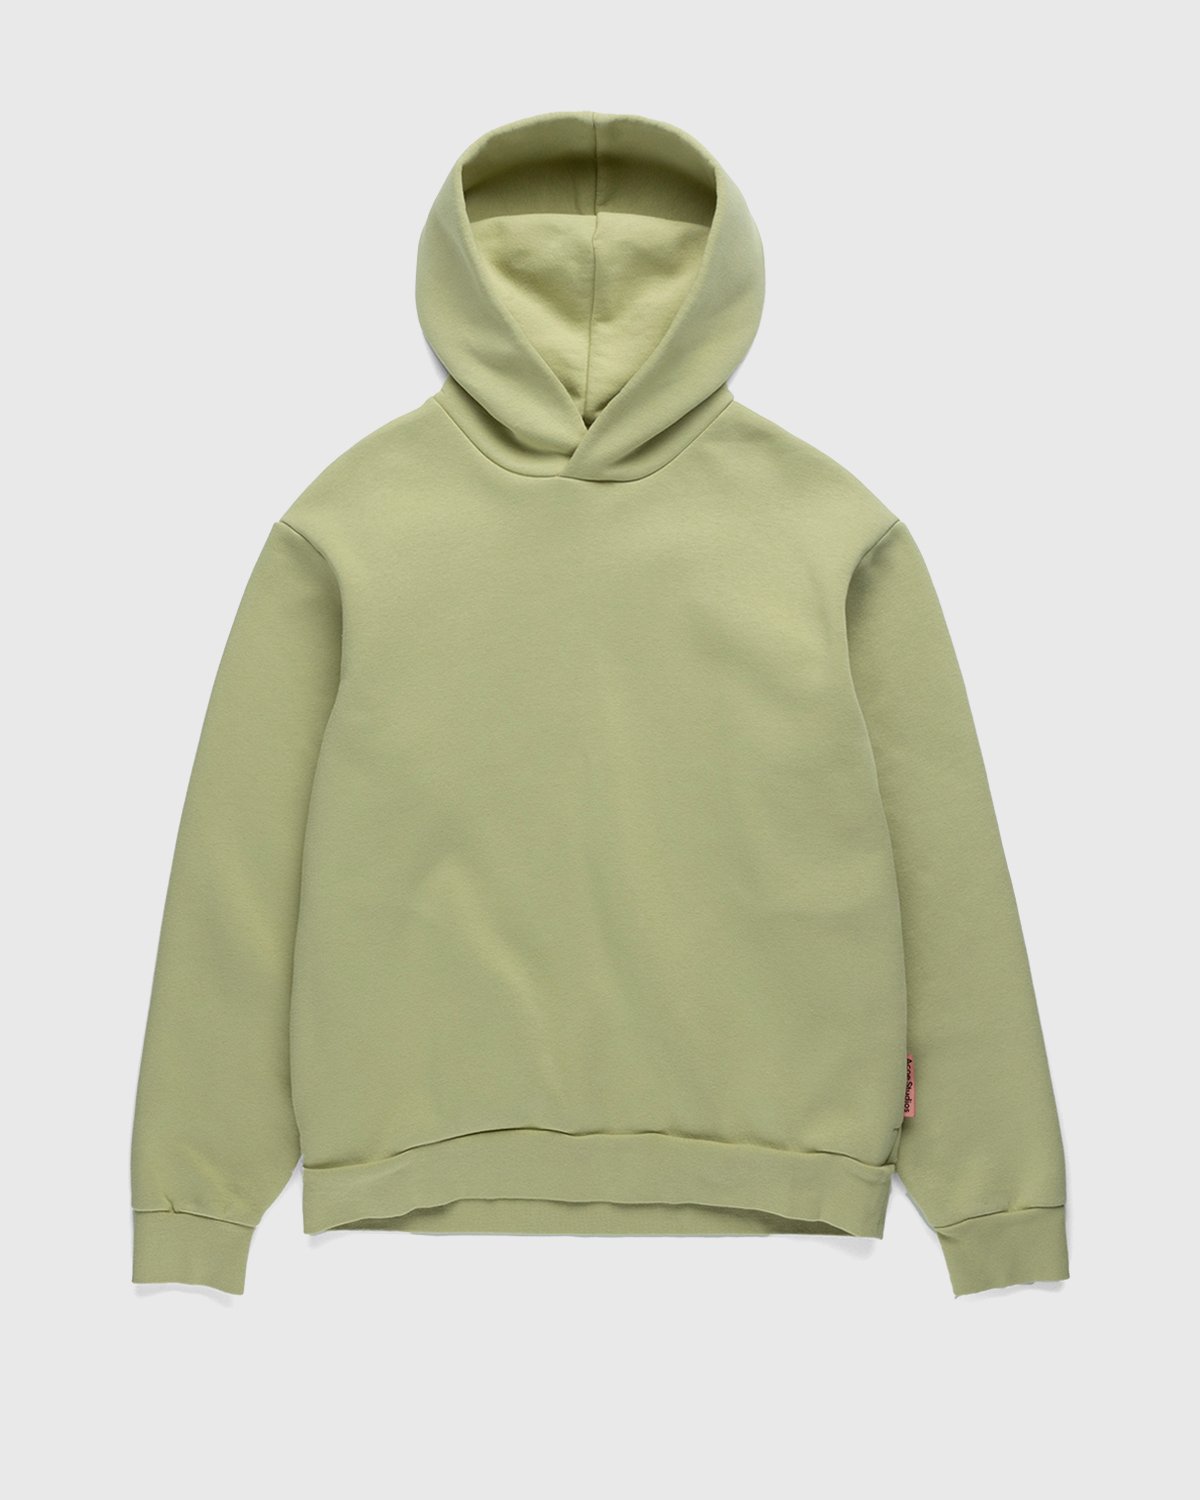 Acne Studios - Midweight Fleece Hooded Sweatshirt Pale Green - Clothing - Green - Image 1